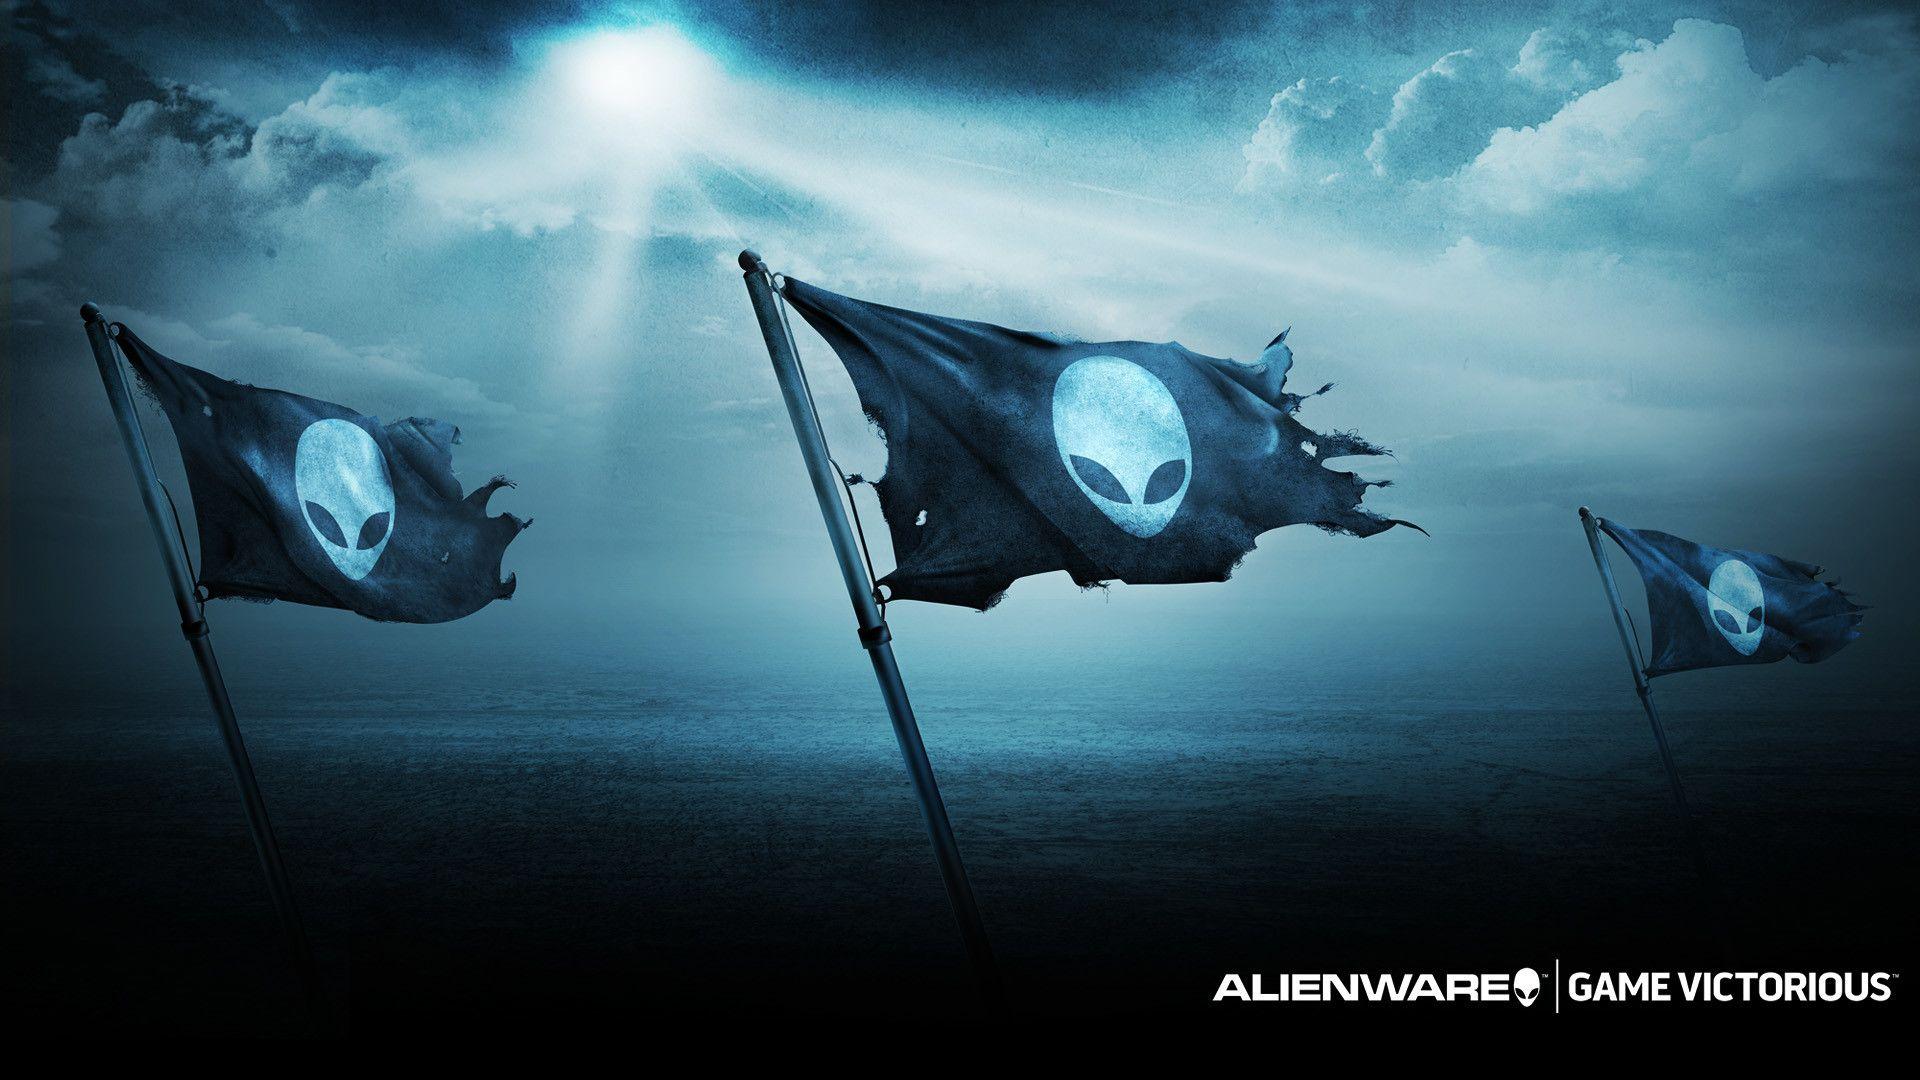 HD Alienware Wallpaper